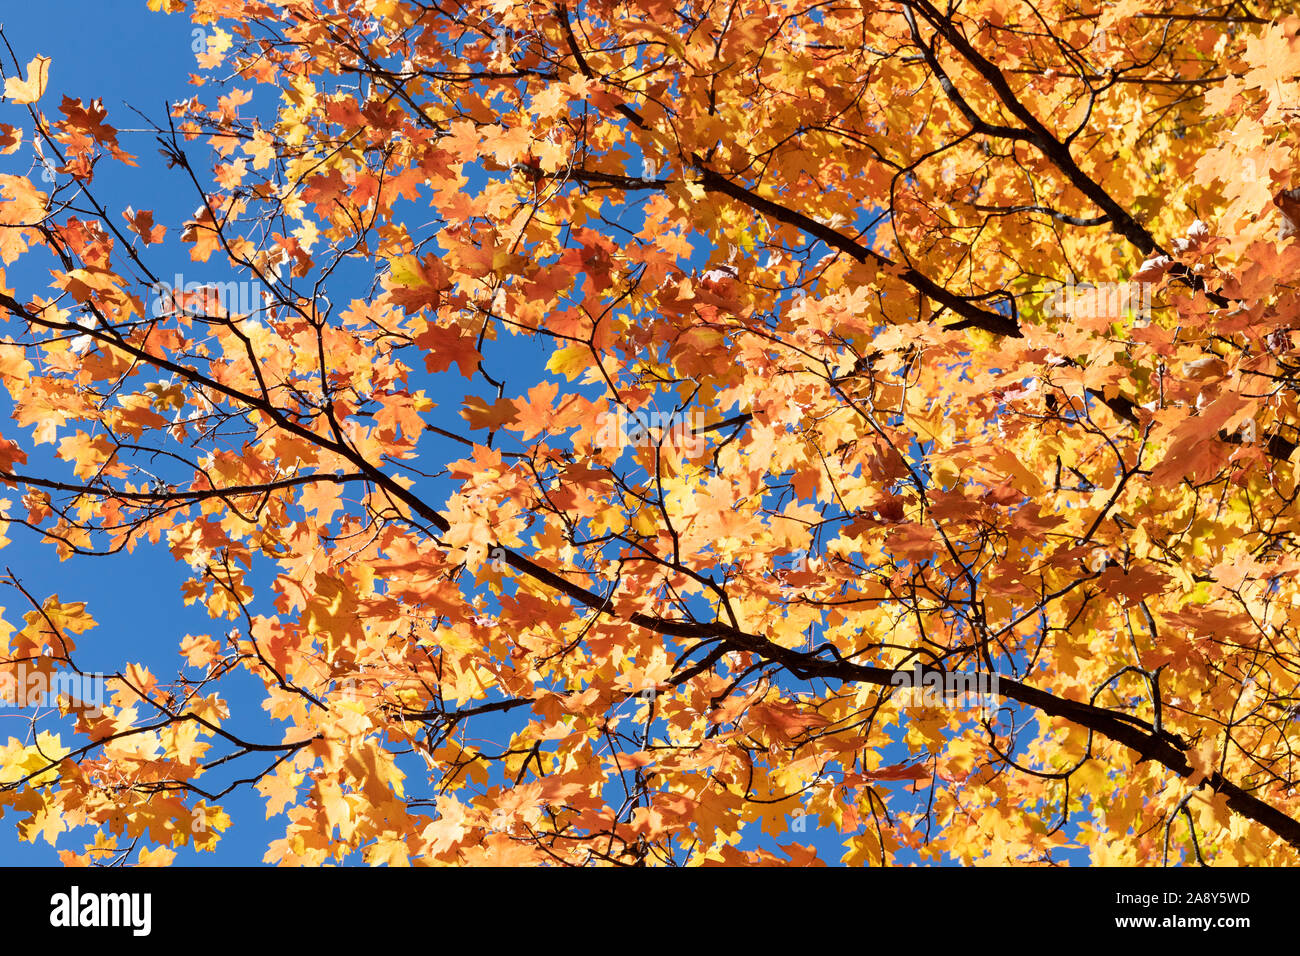 Intense fall colors, orange maple leaves backlit against a deep blue sky. Stock Photo